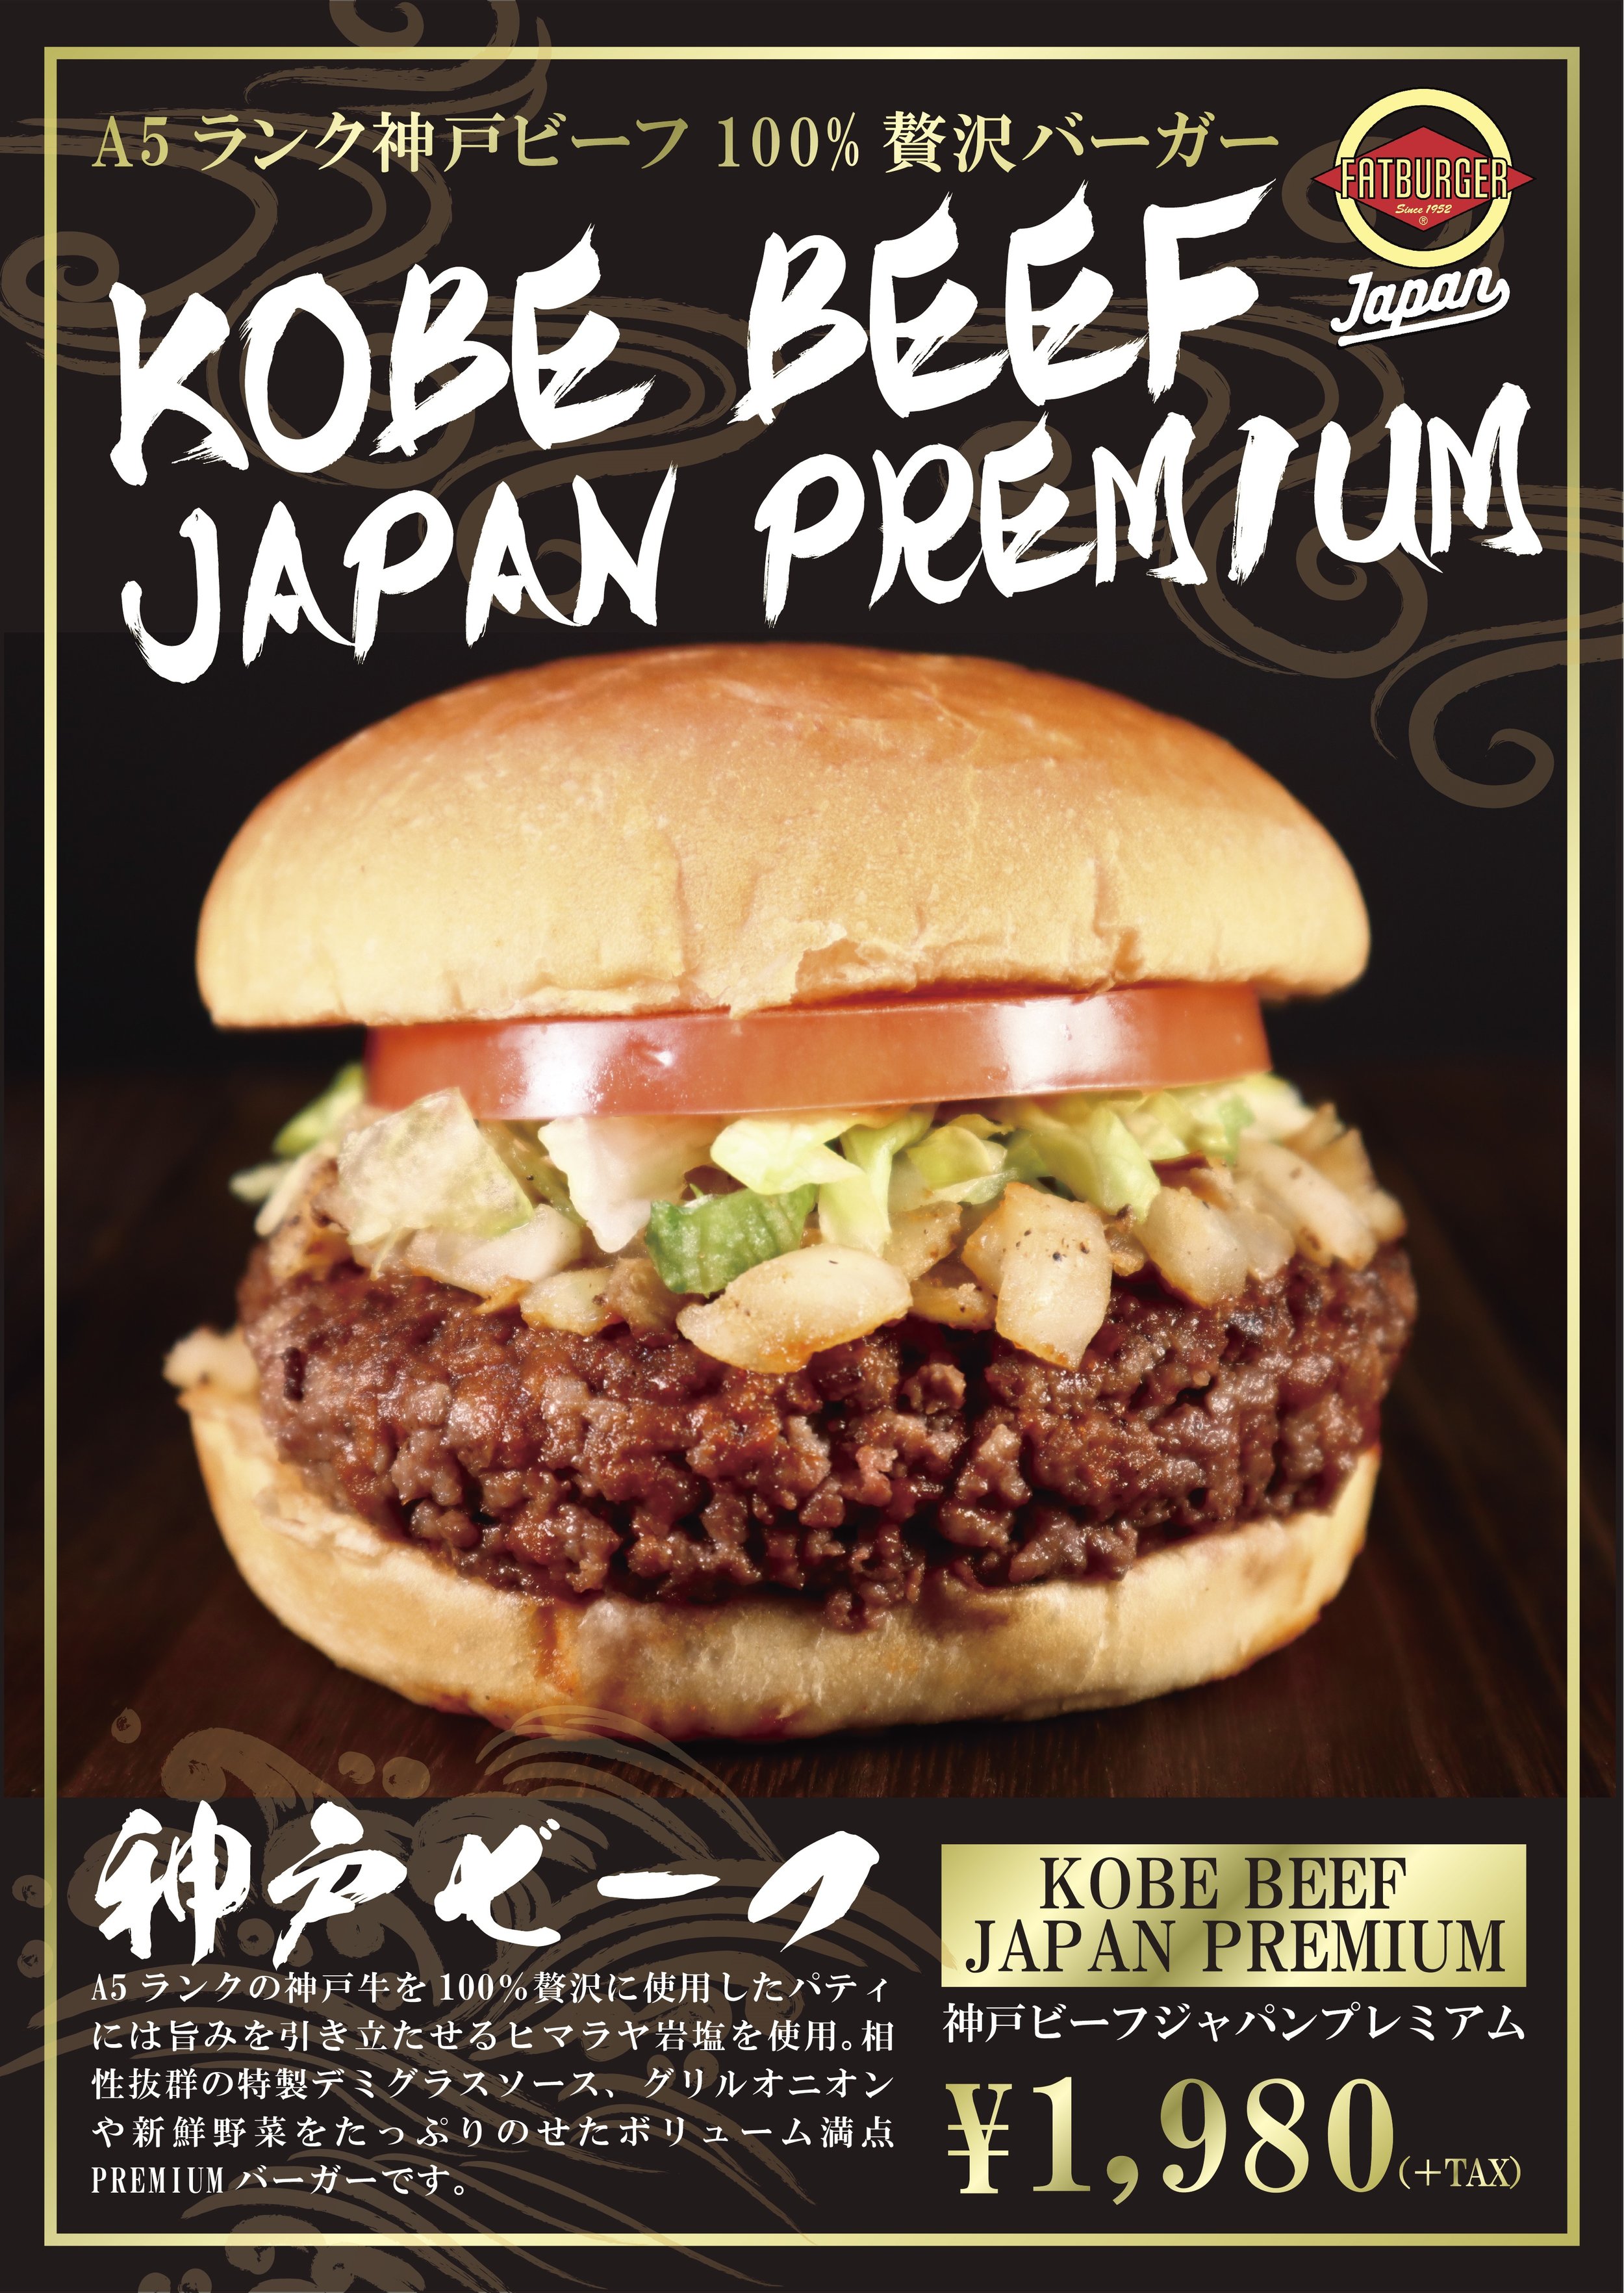 Kobe Beef Japan Premium 4月27日 土 発売開始 Fatburger Japan